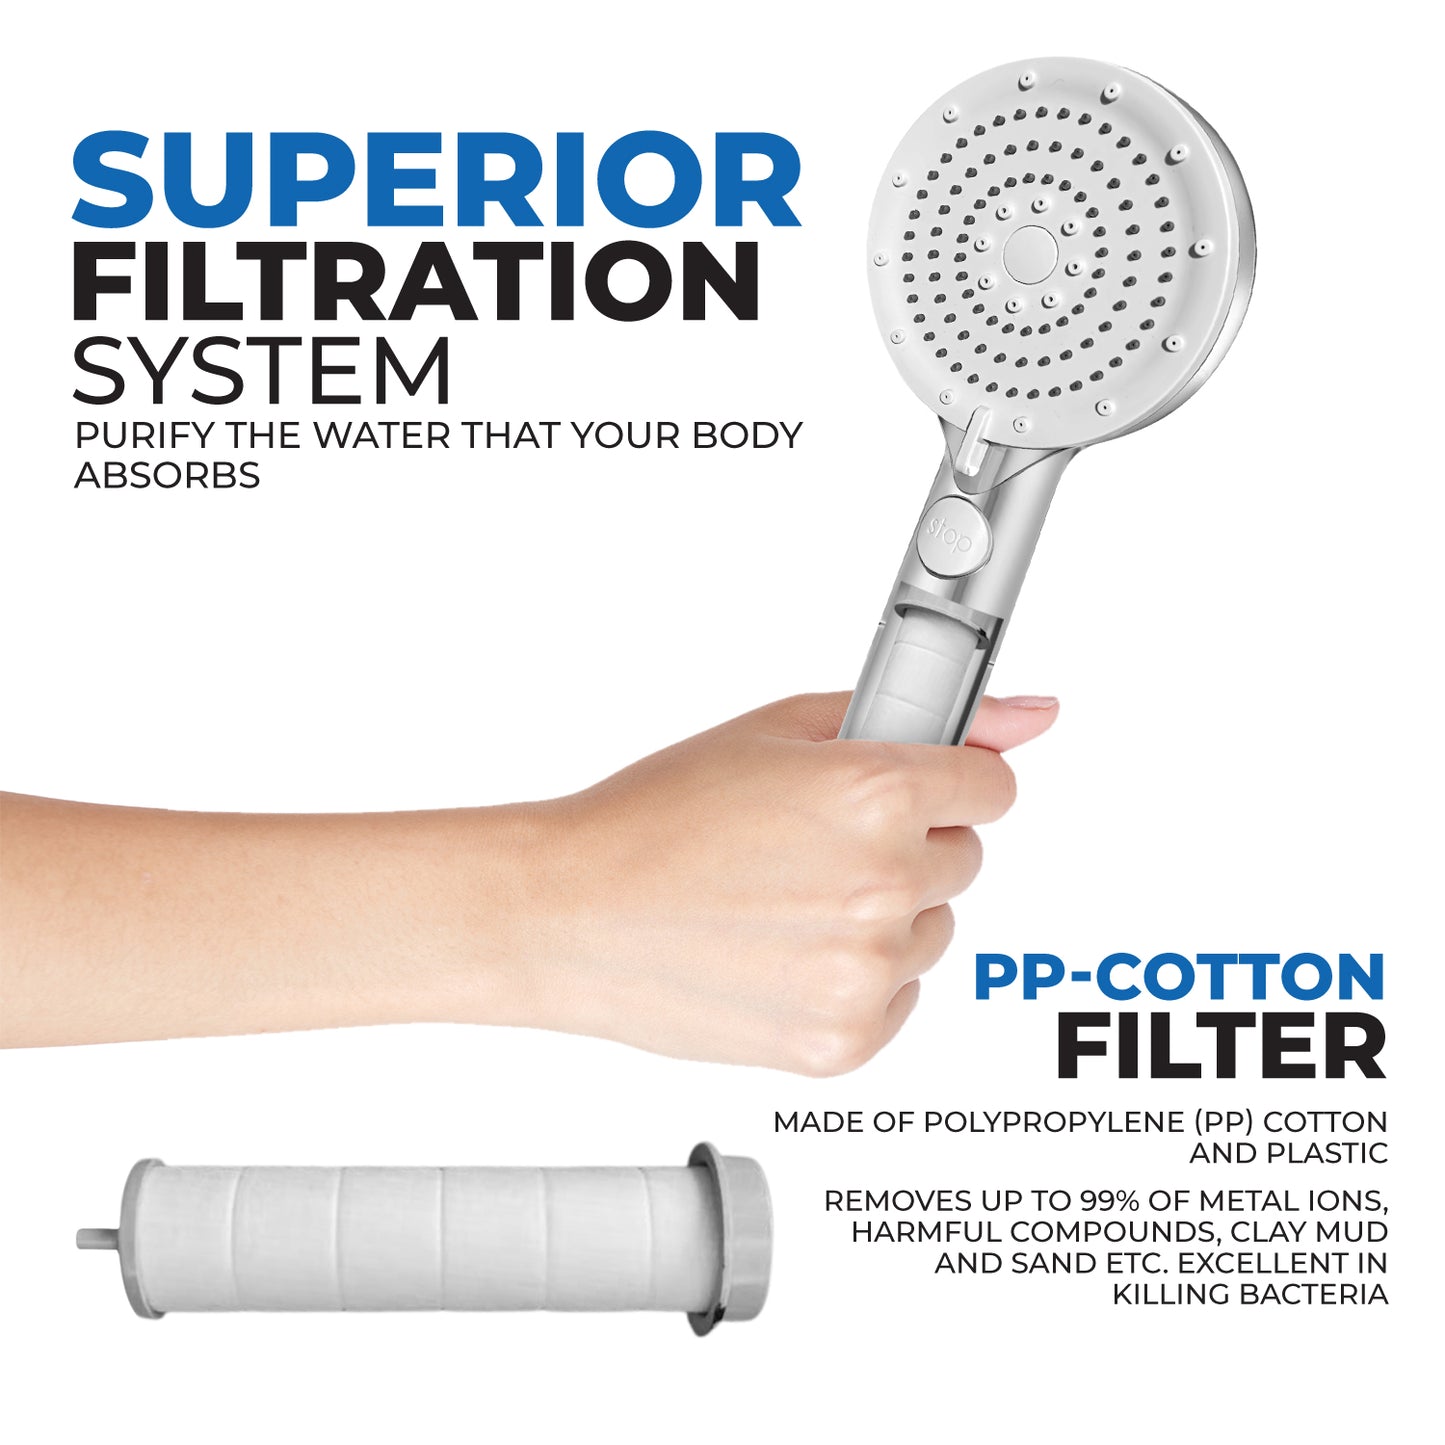 pp-cotton filter